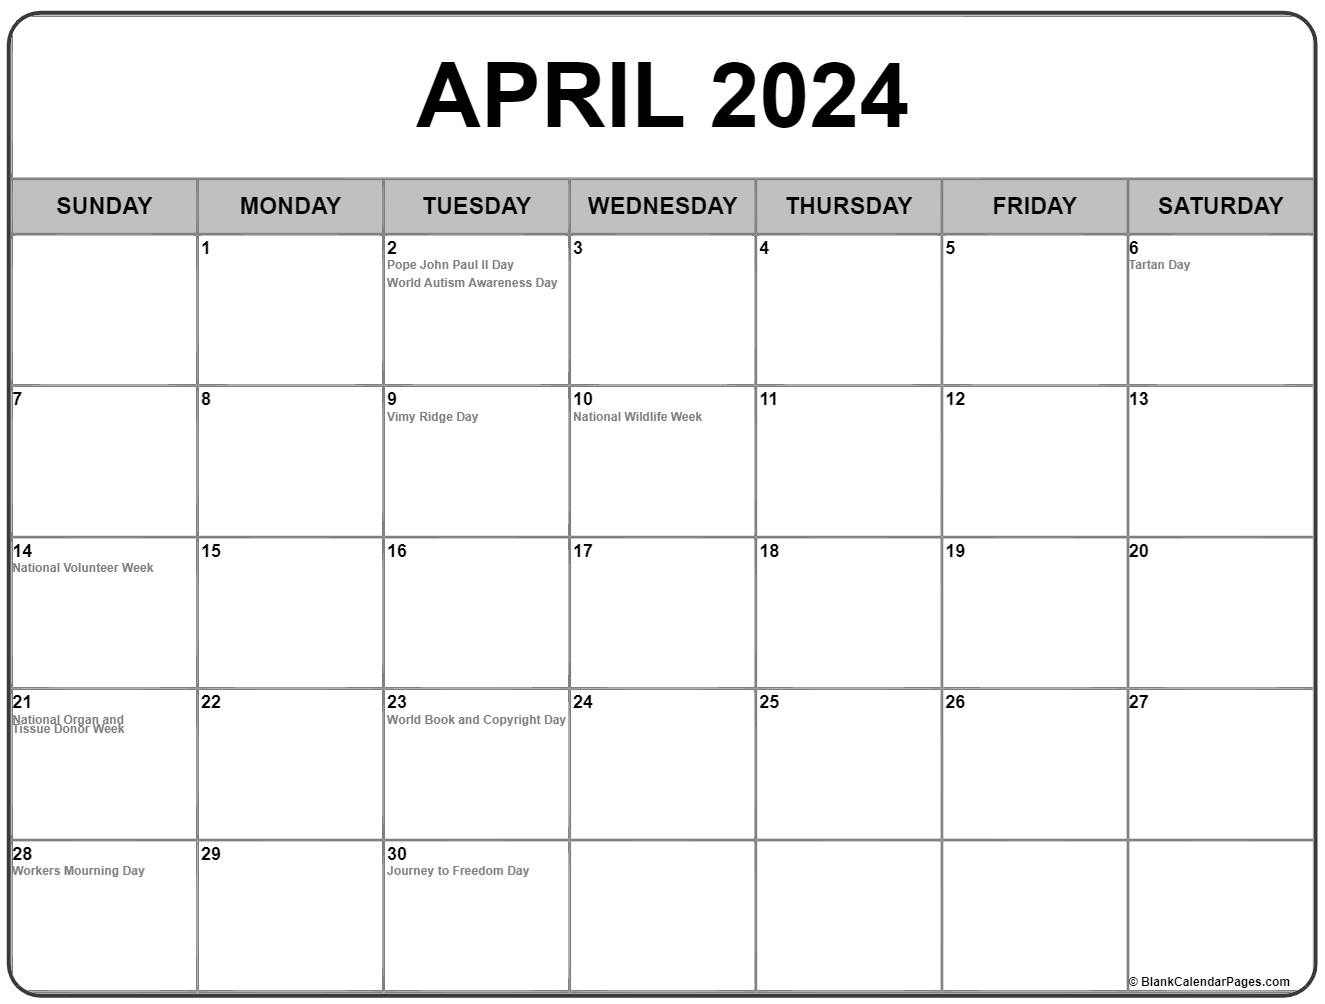 2023 new zealand calendar with holidays 2023 calendar with week